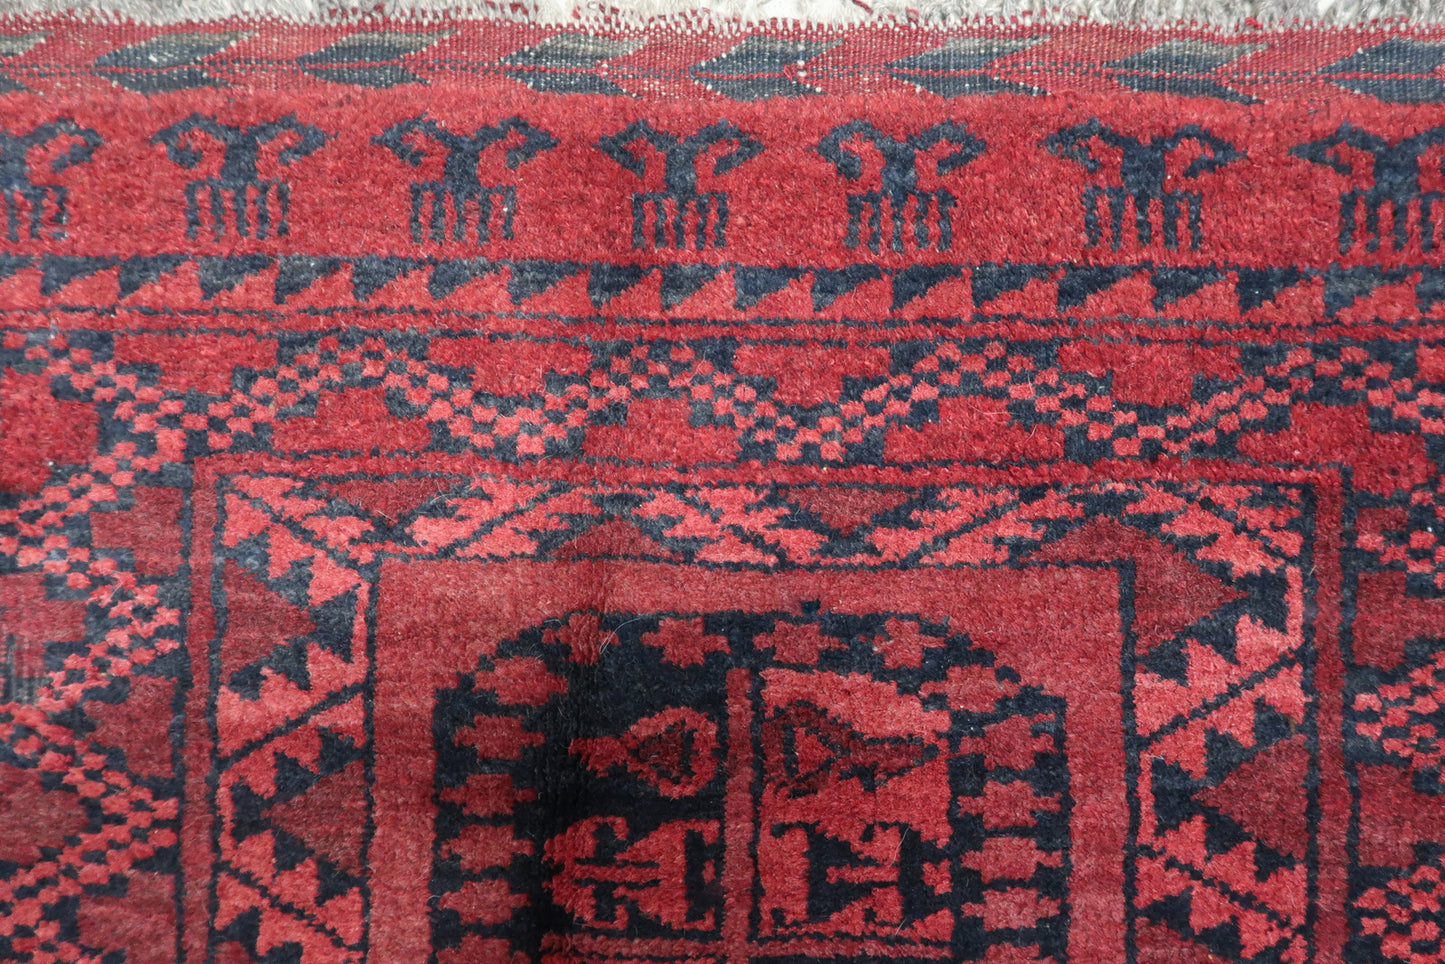 Intricate Design - Handwoven Afghan Rug